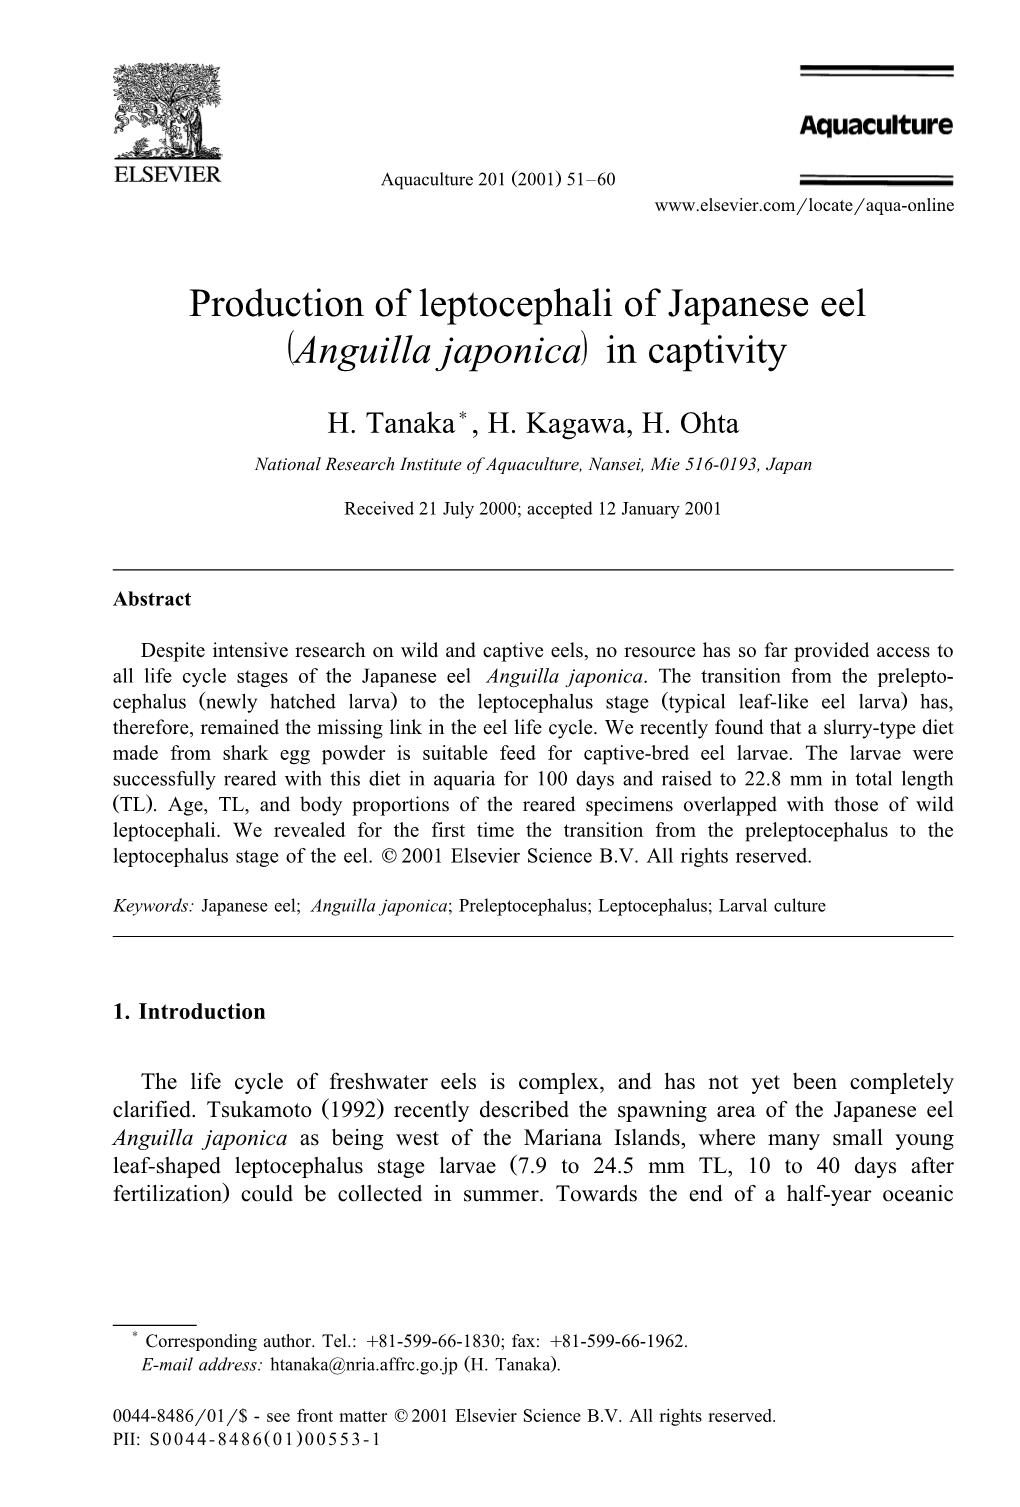 Production of Leptocephali of Japanese Eel Ž / Anguilla Japonica